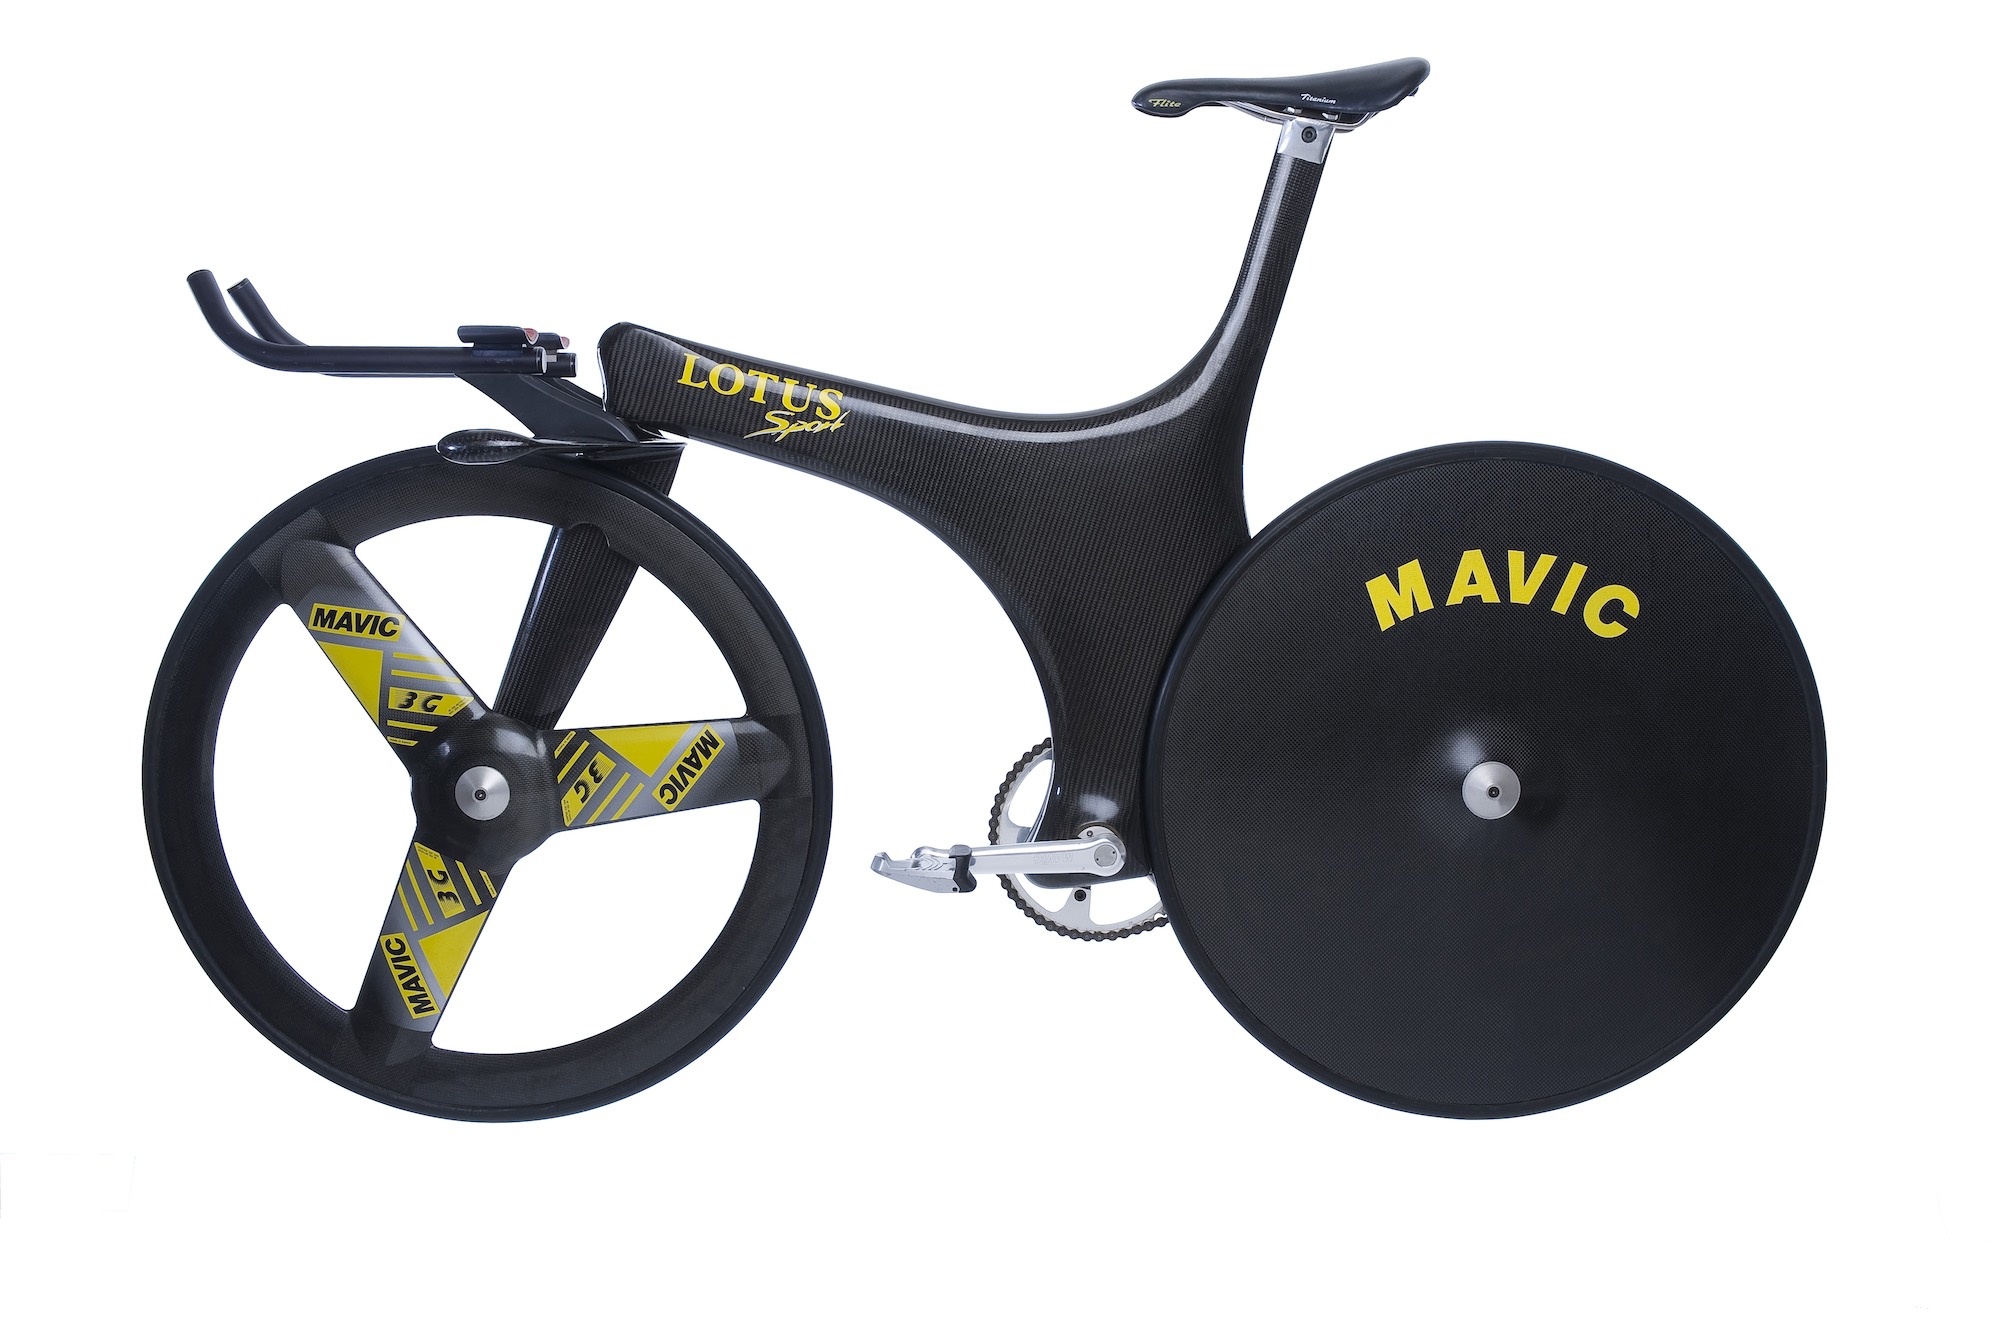 Lotos type 108 Track bike with Mavic aero wheels